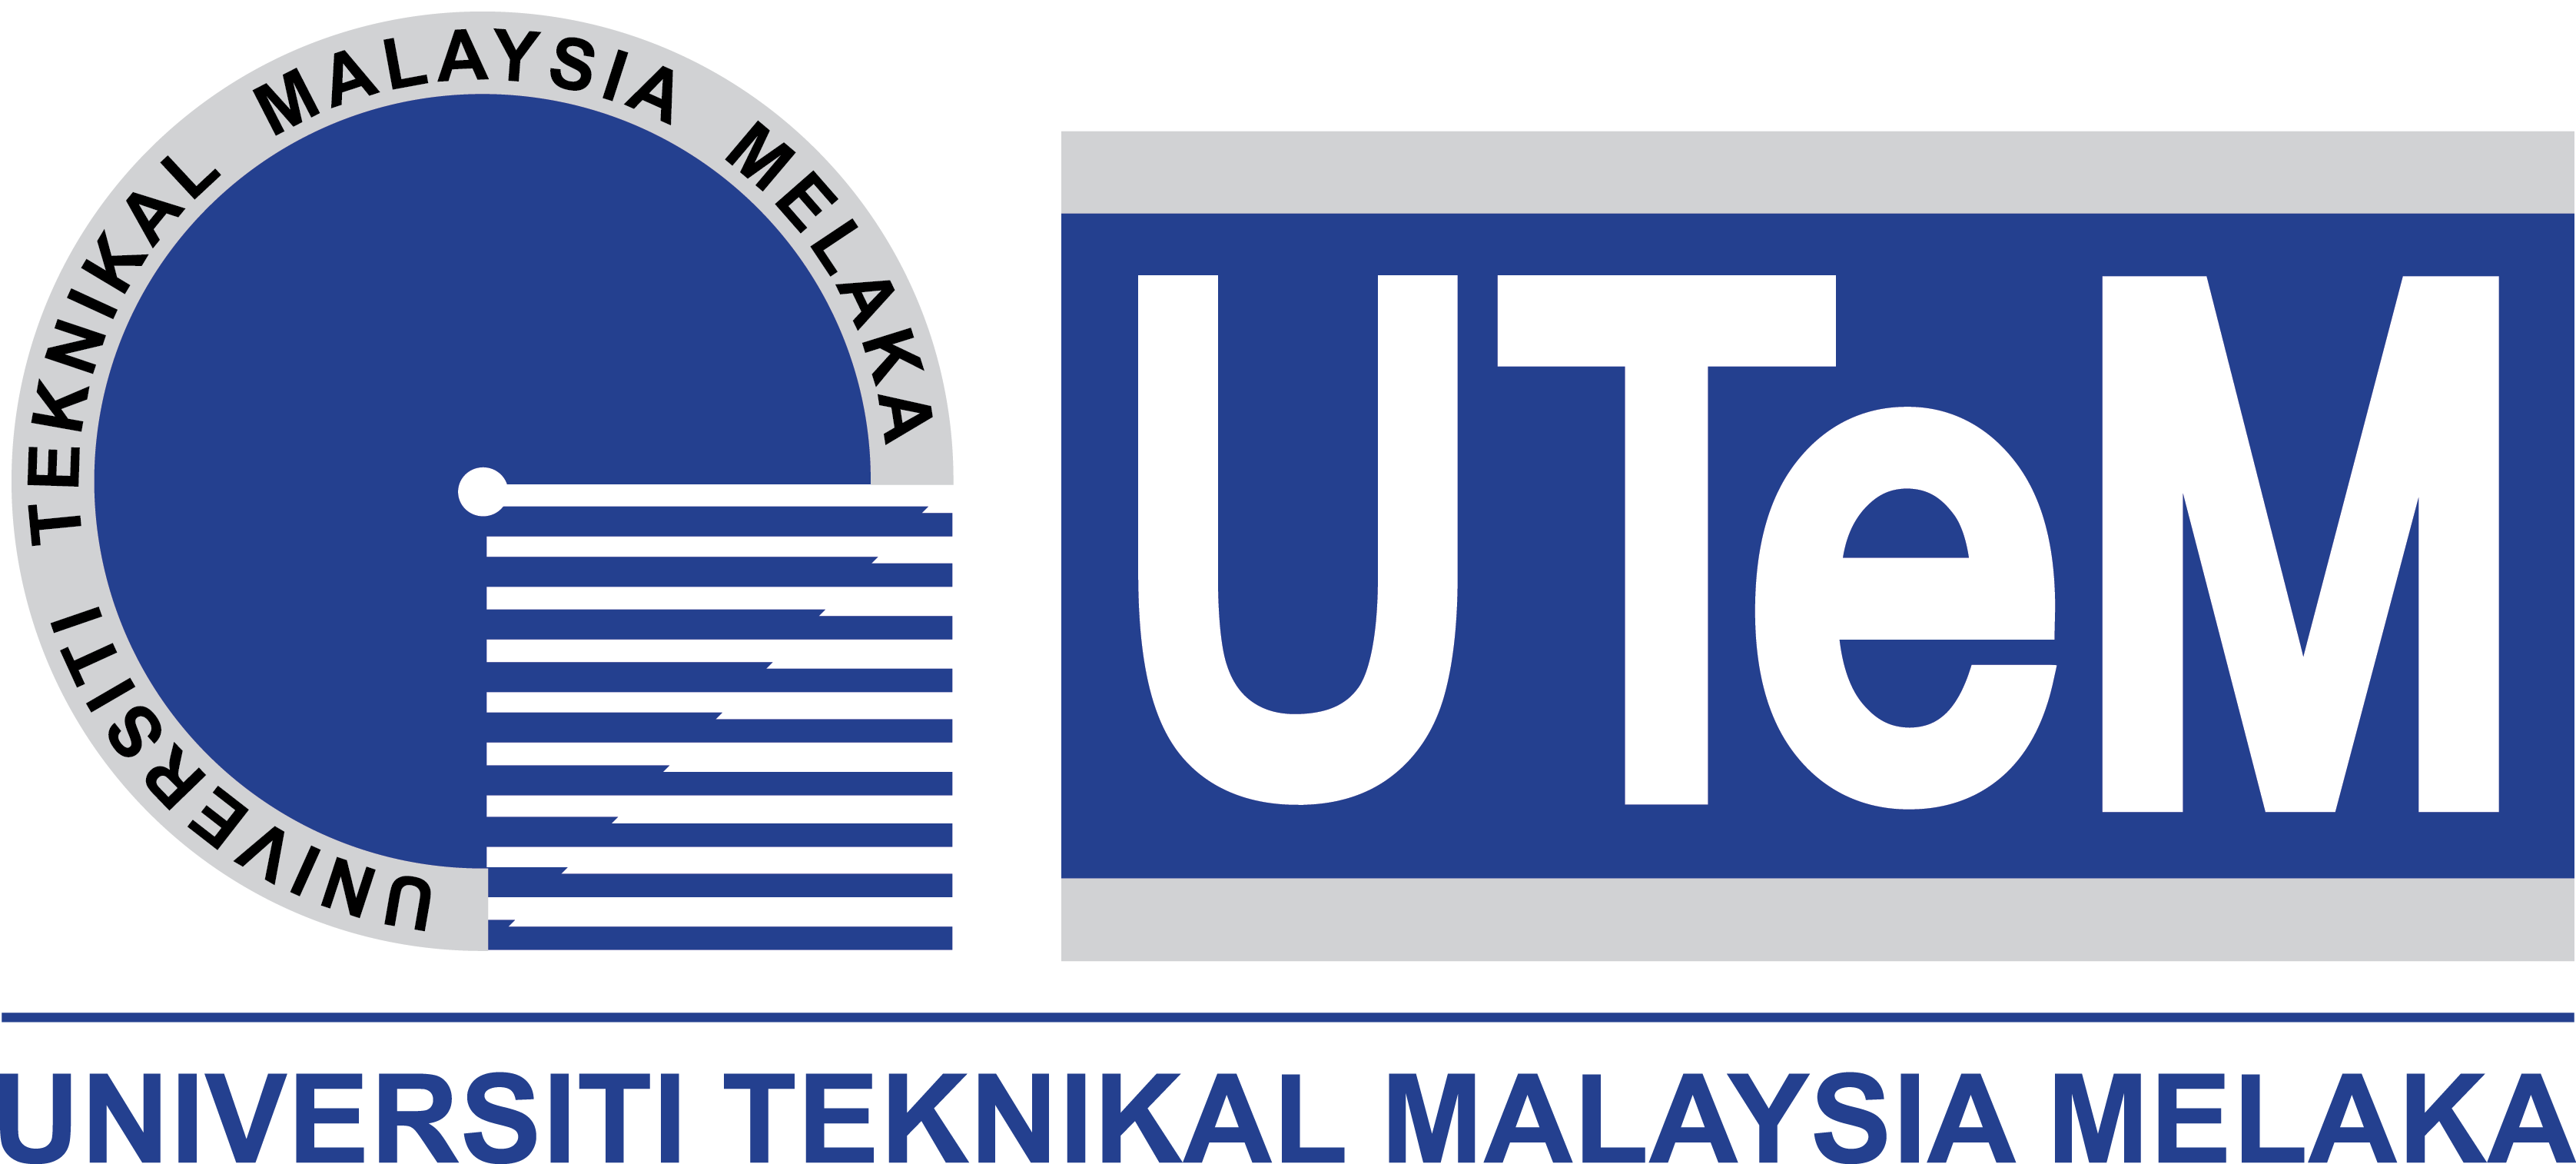 Universiti Teknikal Malaysia Melaka (UTeM) logo